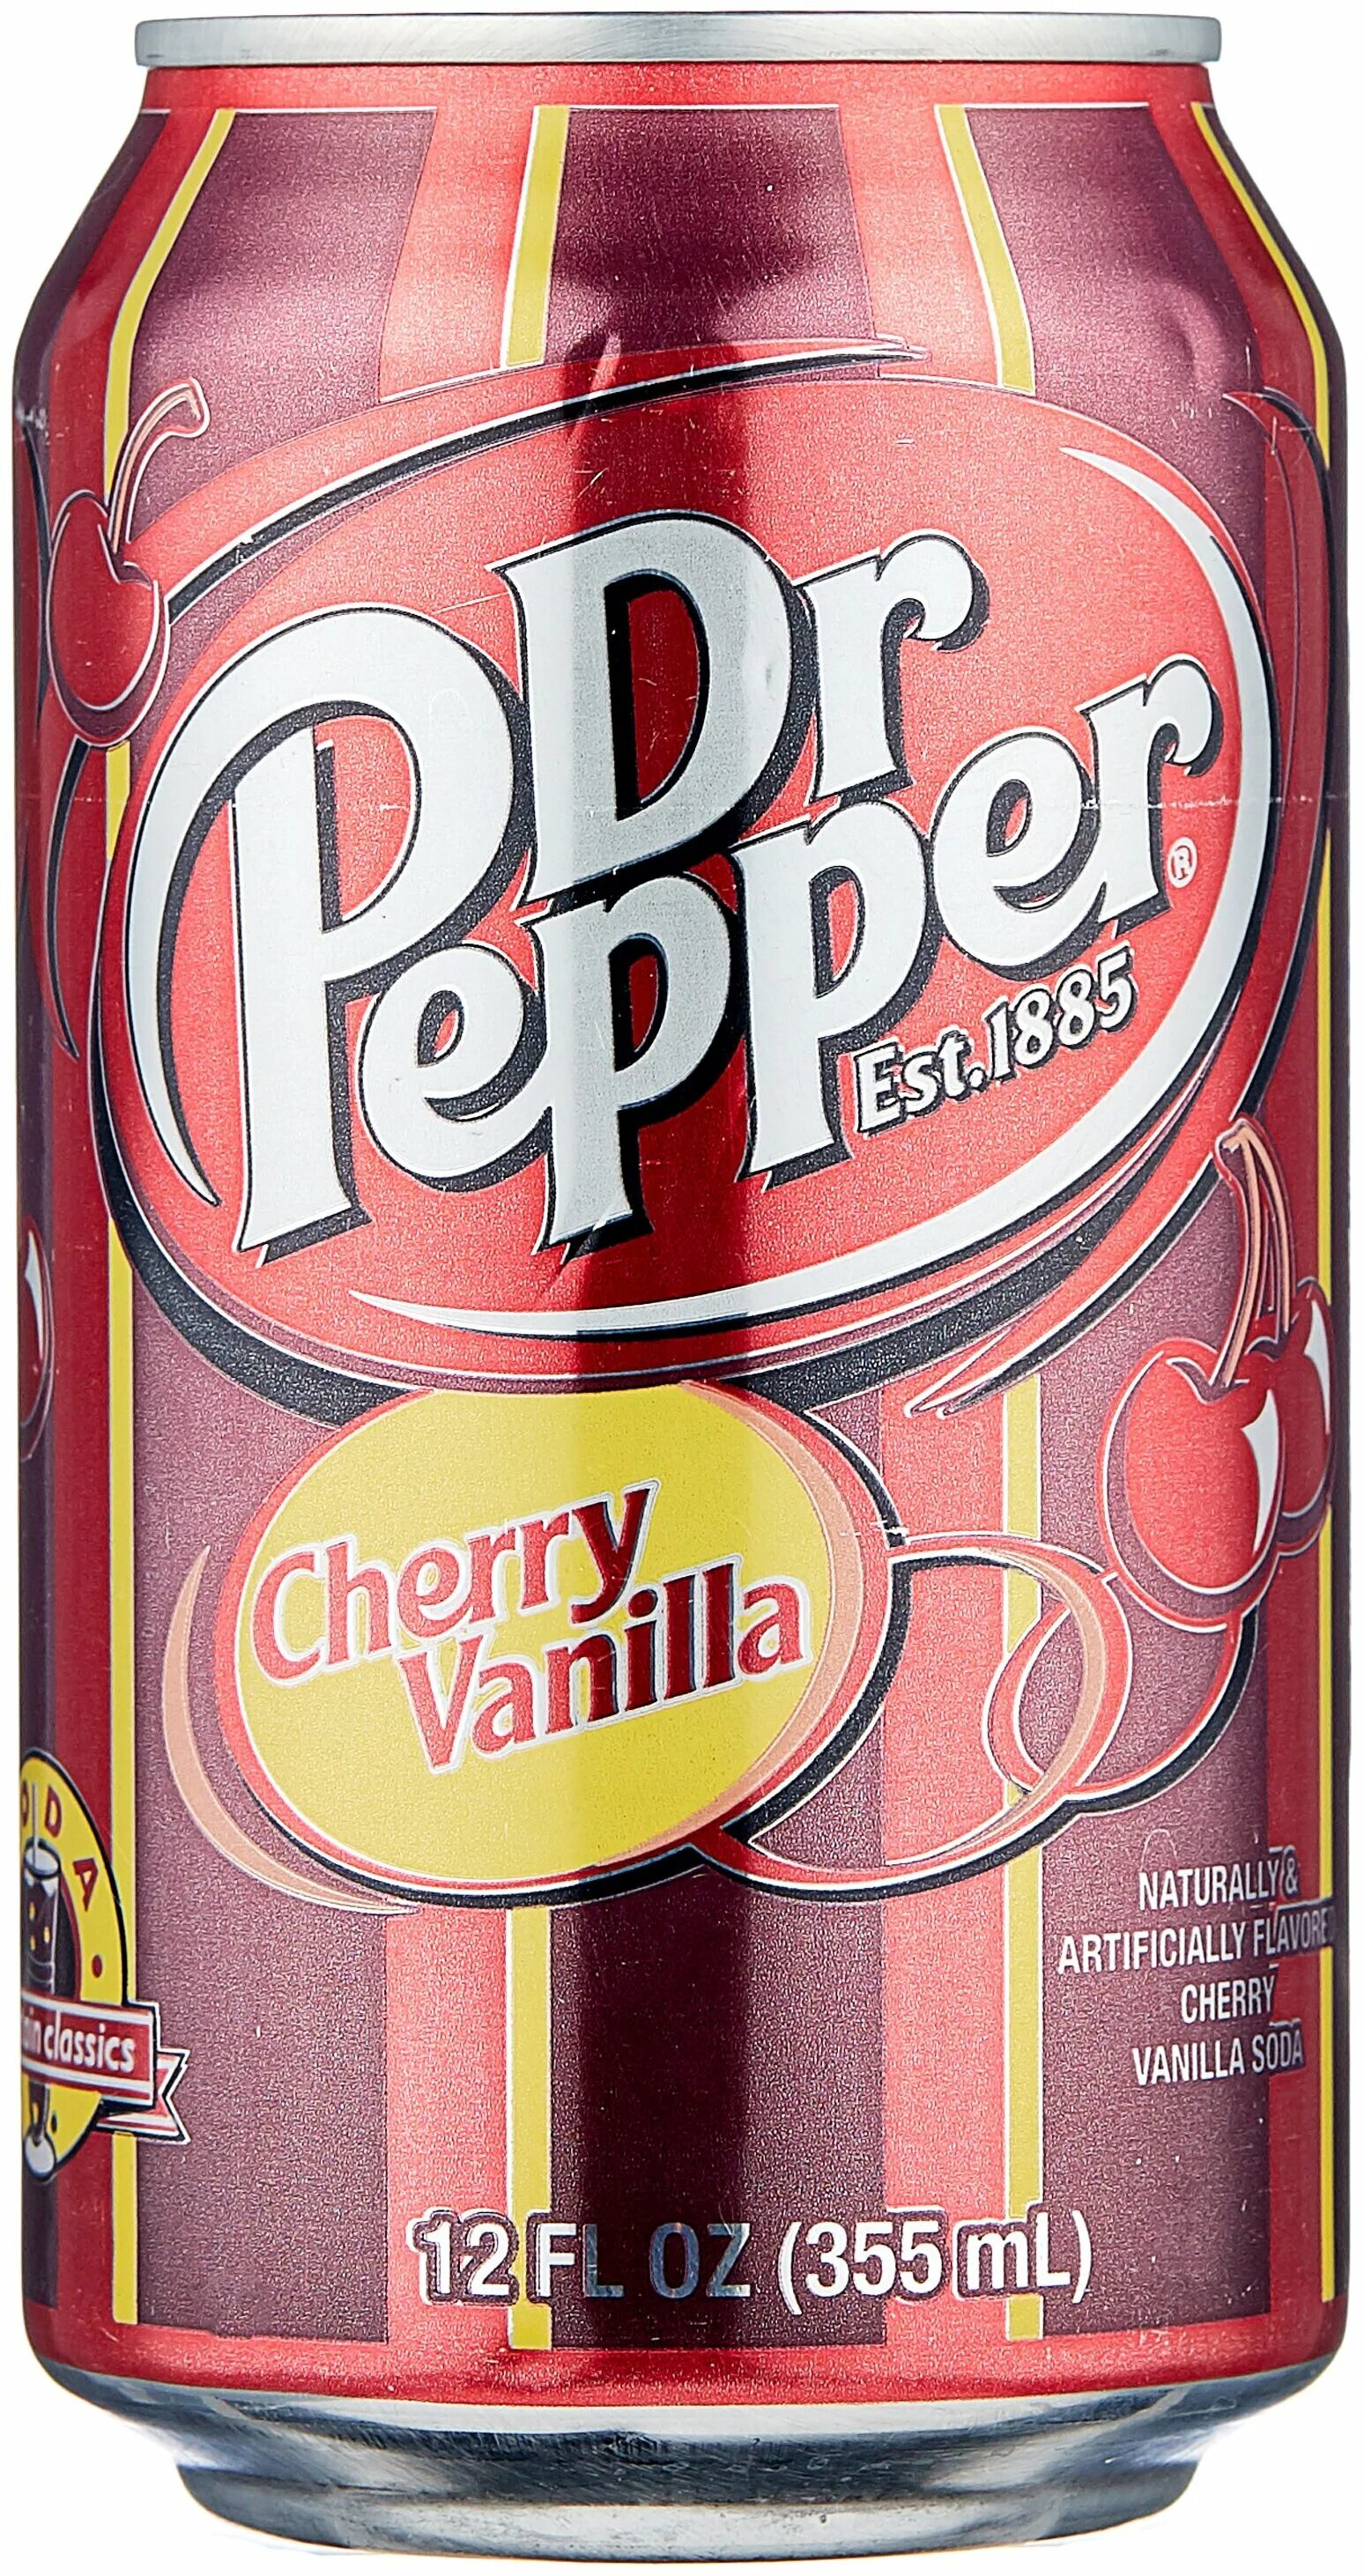 Напиток dr pepper. Dr.Pepper Cherry Vanilla, 355ml. Доктор Пеппер черри. Вишневый Dr Pepper. Доктор Пеппер вишня ваниль.